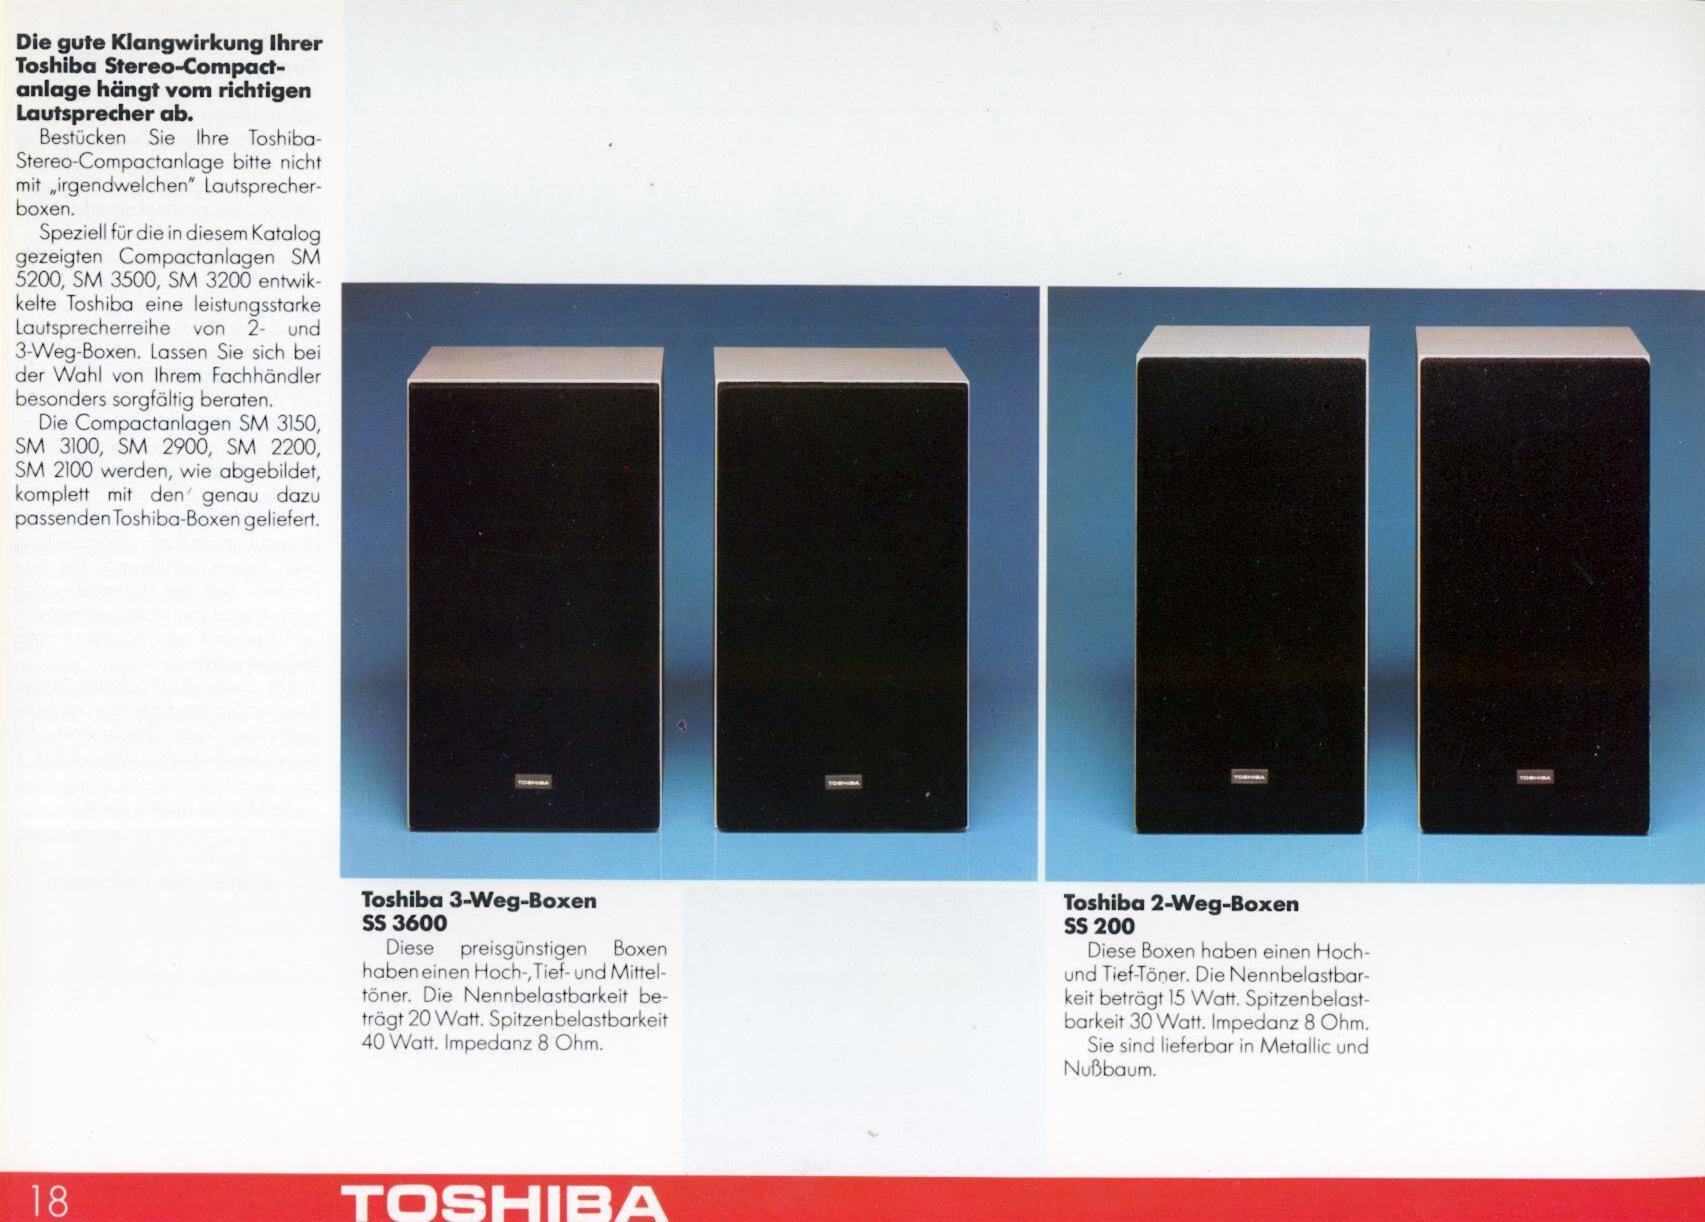 Toshiba SS-200-3600-Prospekt-1.jpg